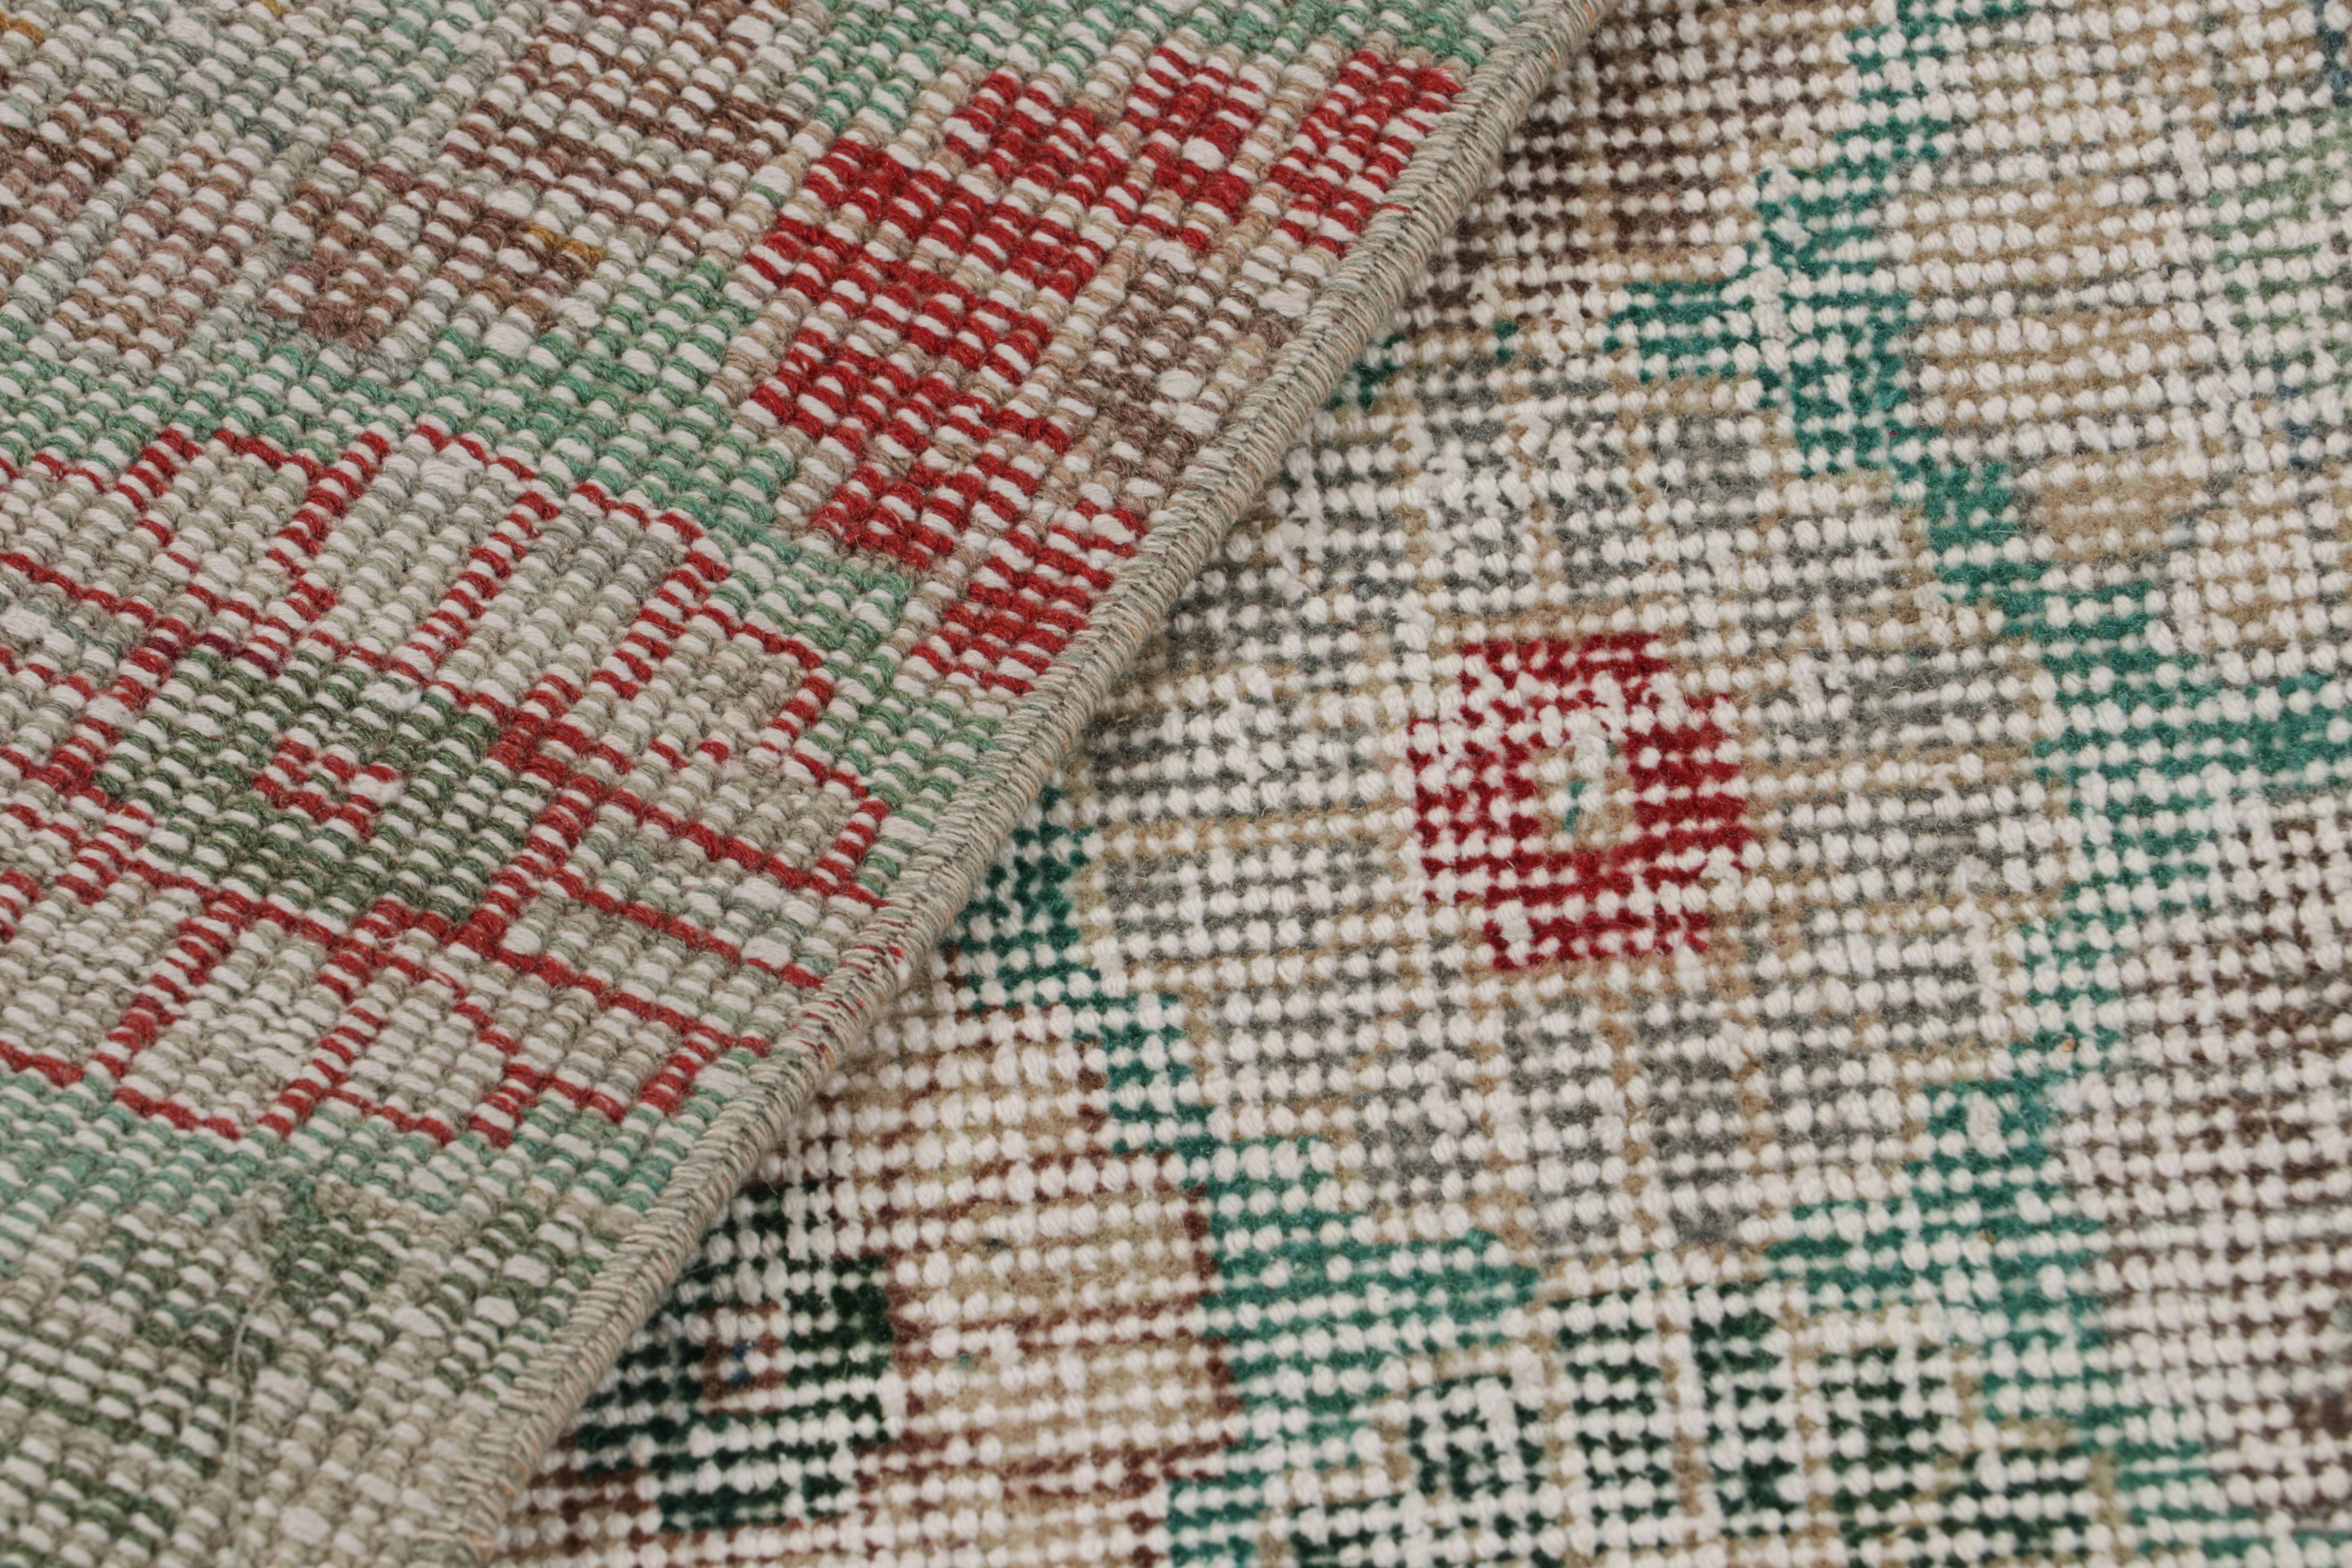 Wool Vintage Zeki Müren Rug in Teal with Colorful Floral Patterns, from Rug & Kilim For Sale